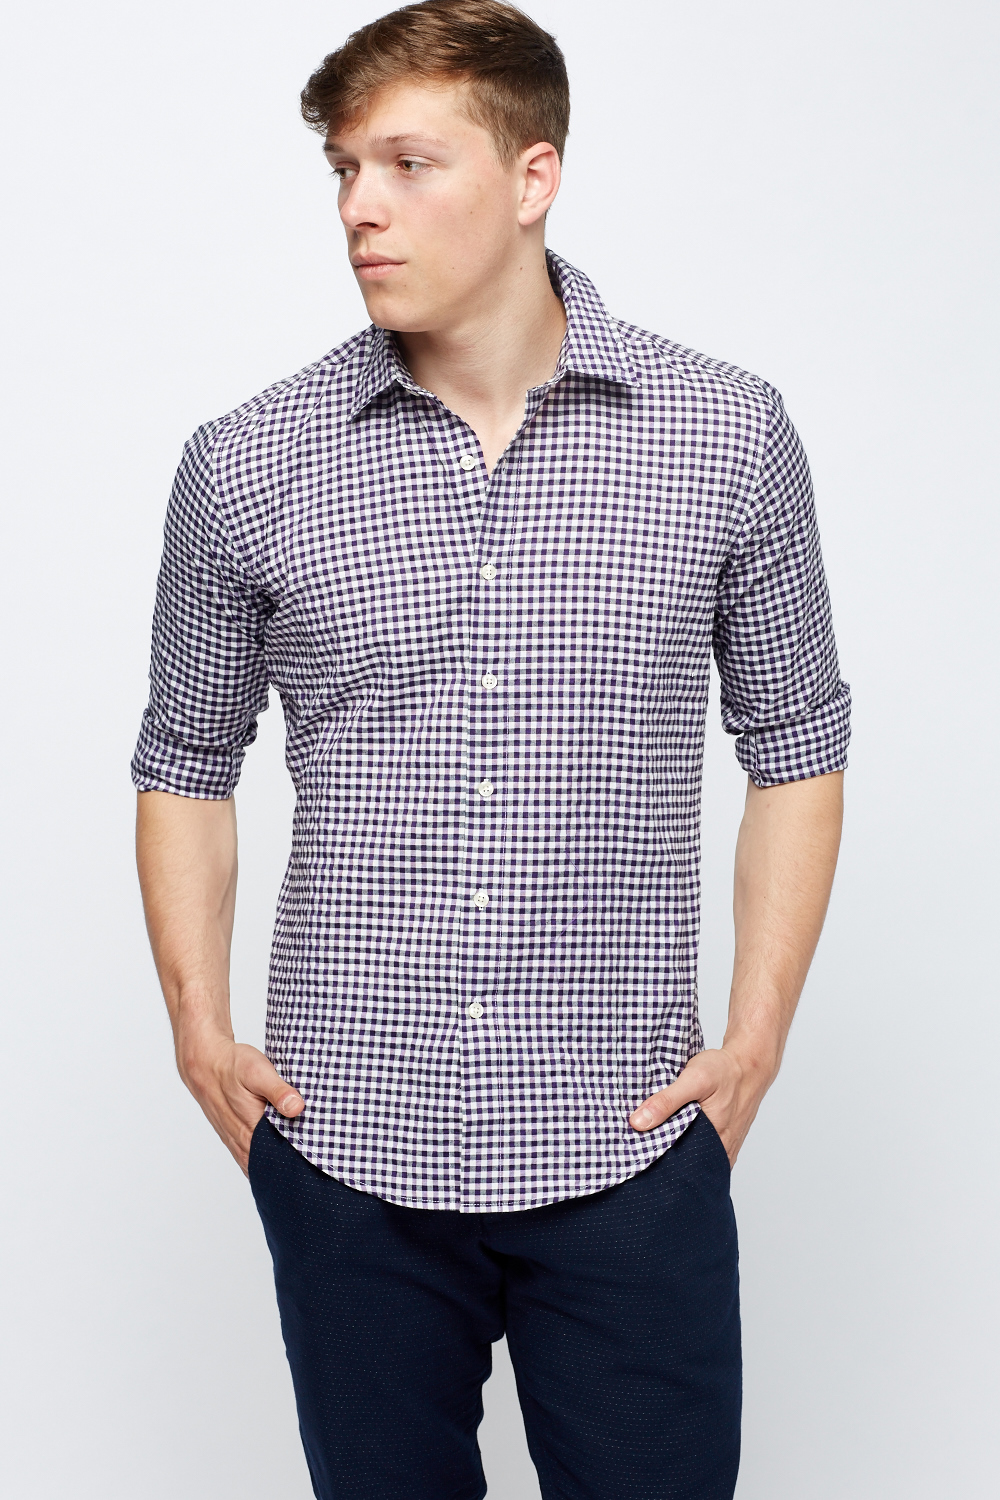 Purple Check Grid Shirt - Just $7